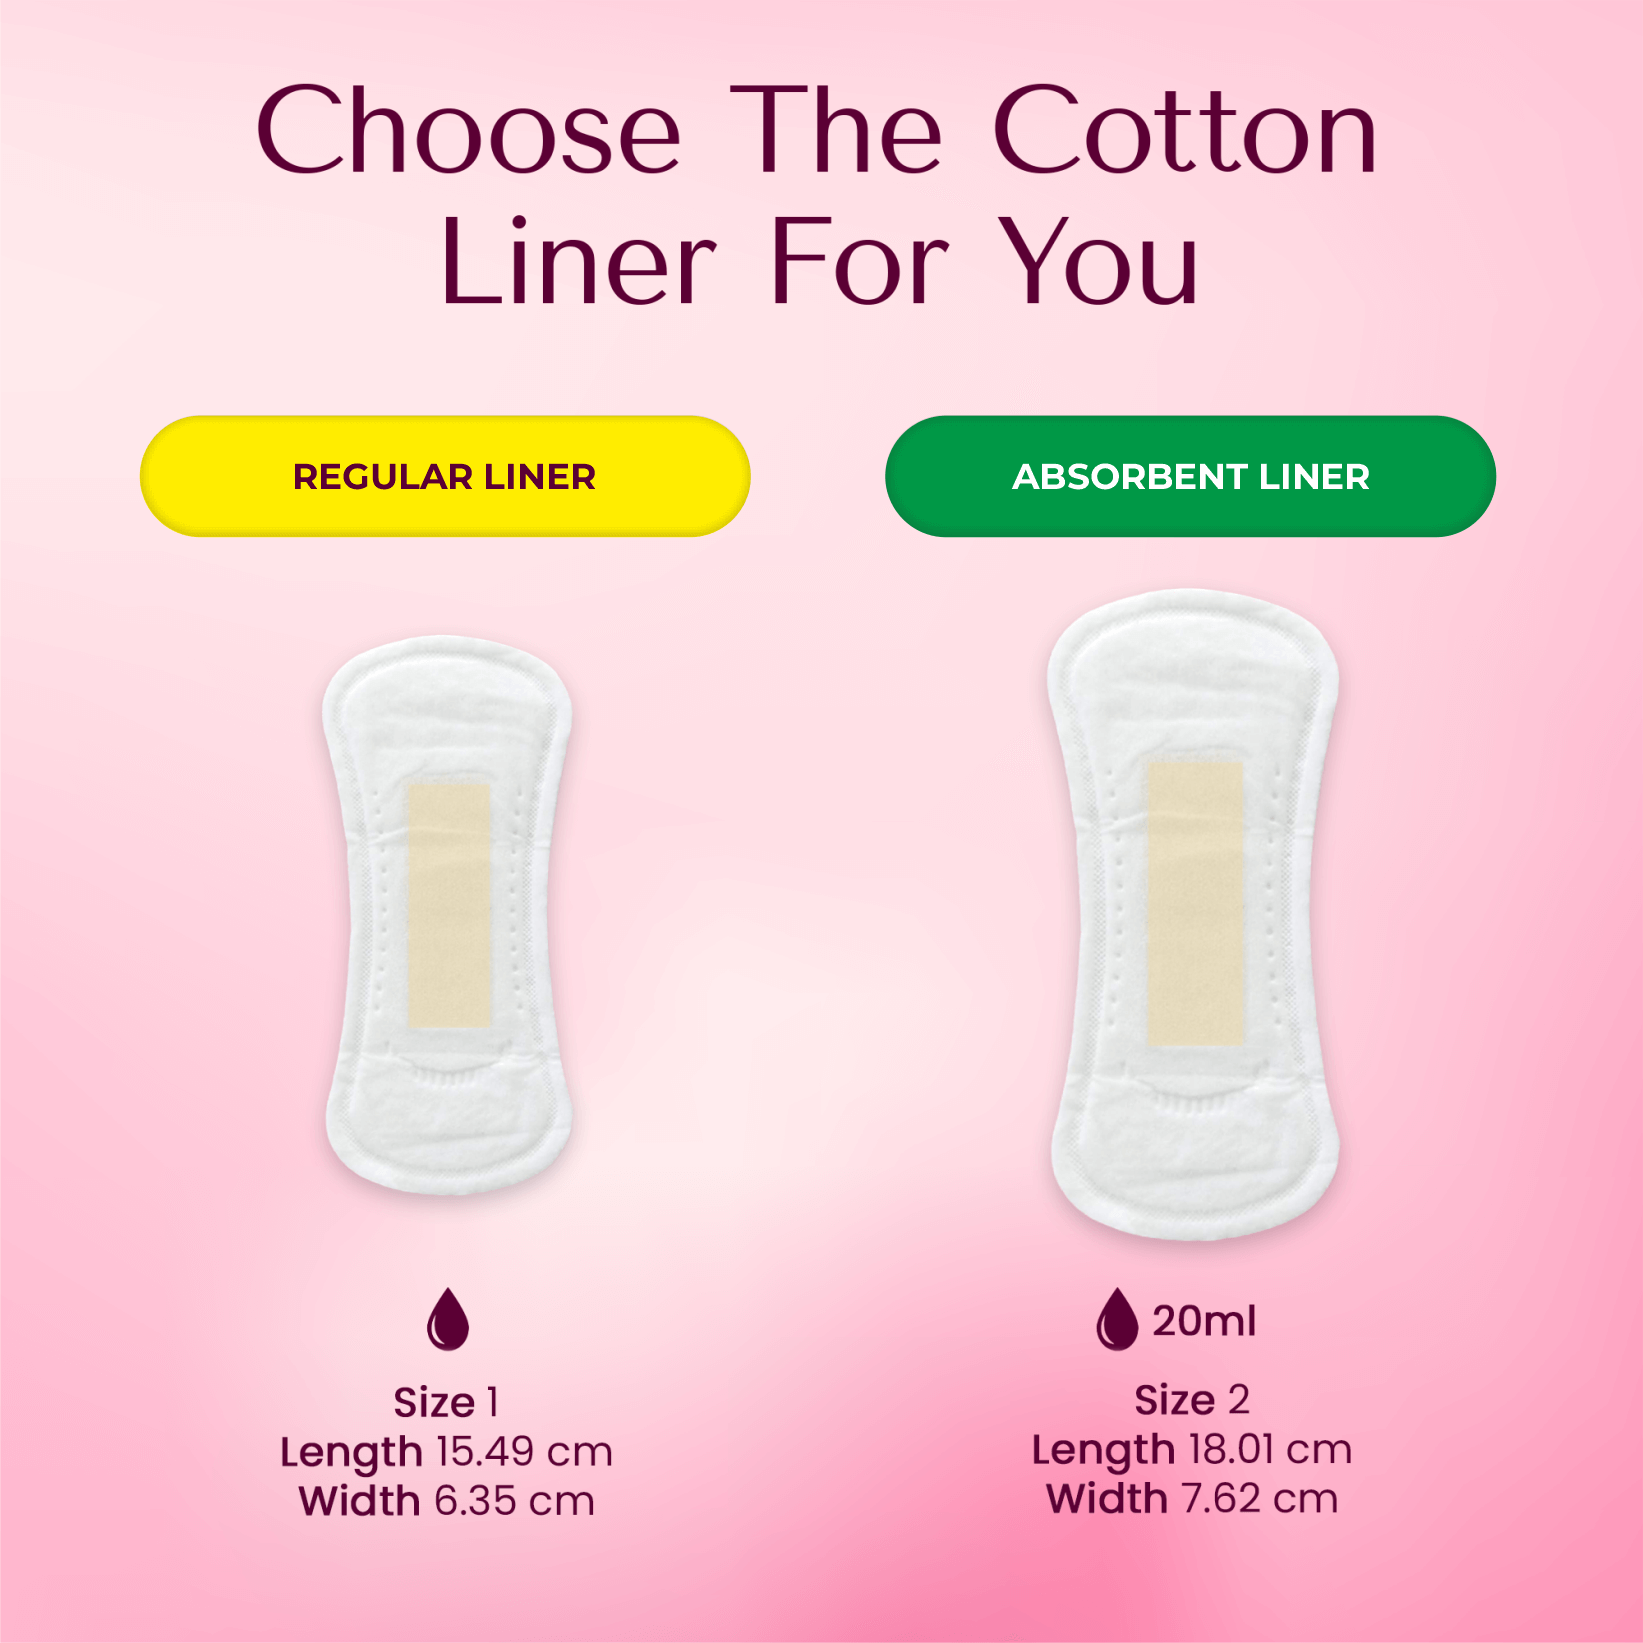 Organic Cotton Liners w/ FAR-IR Anion Strip – Gentle Day